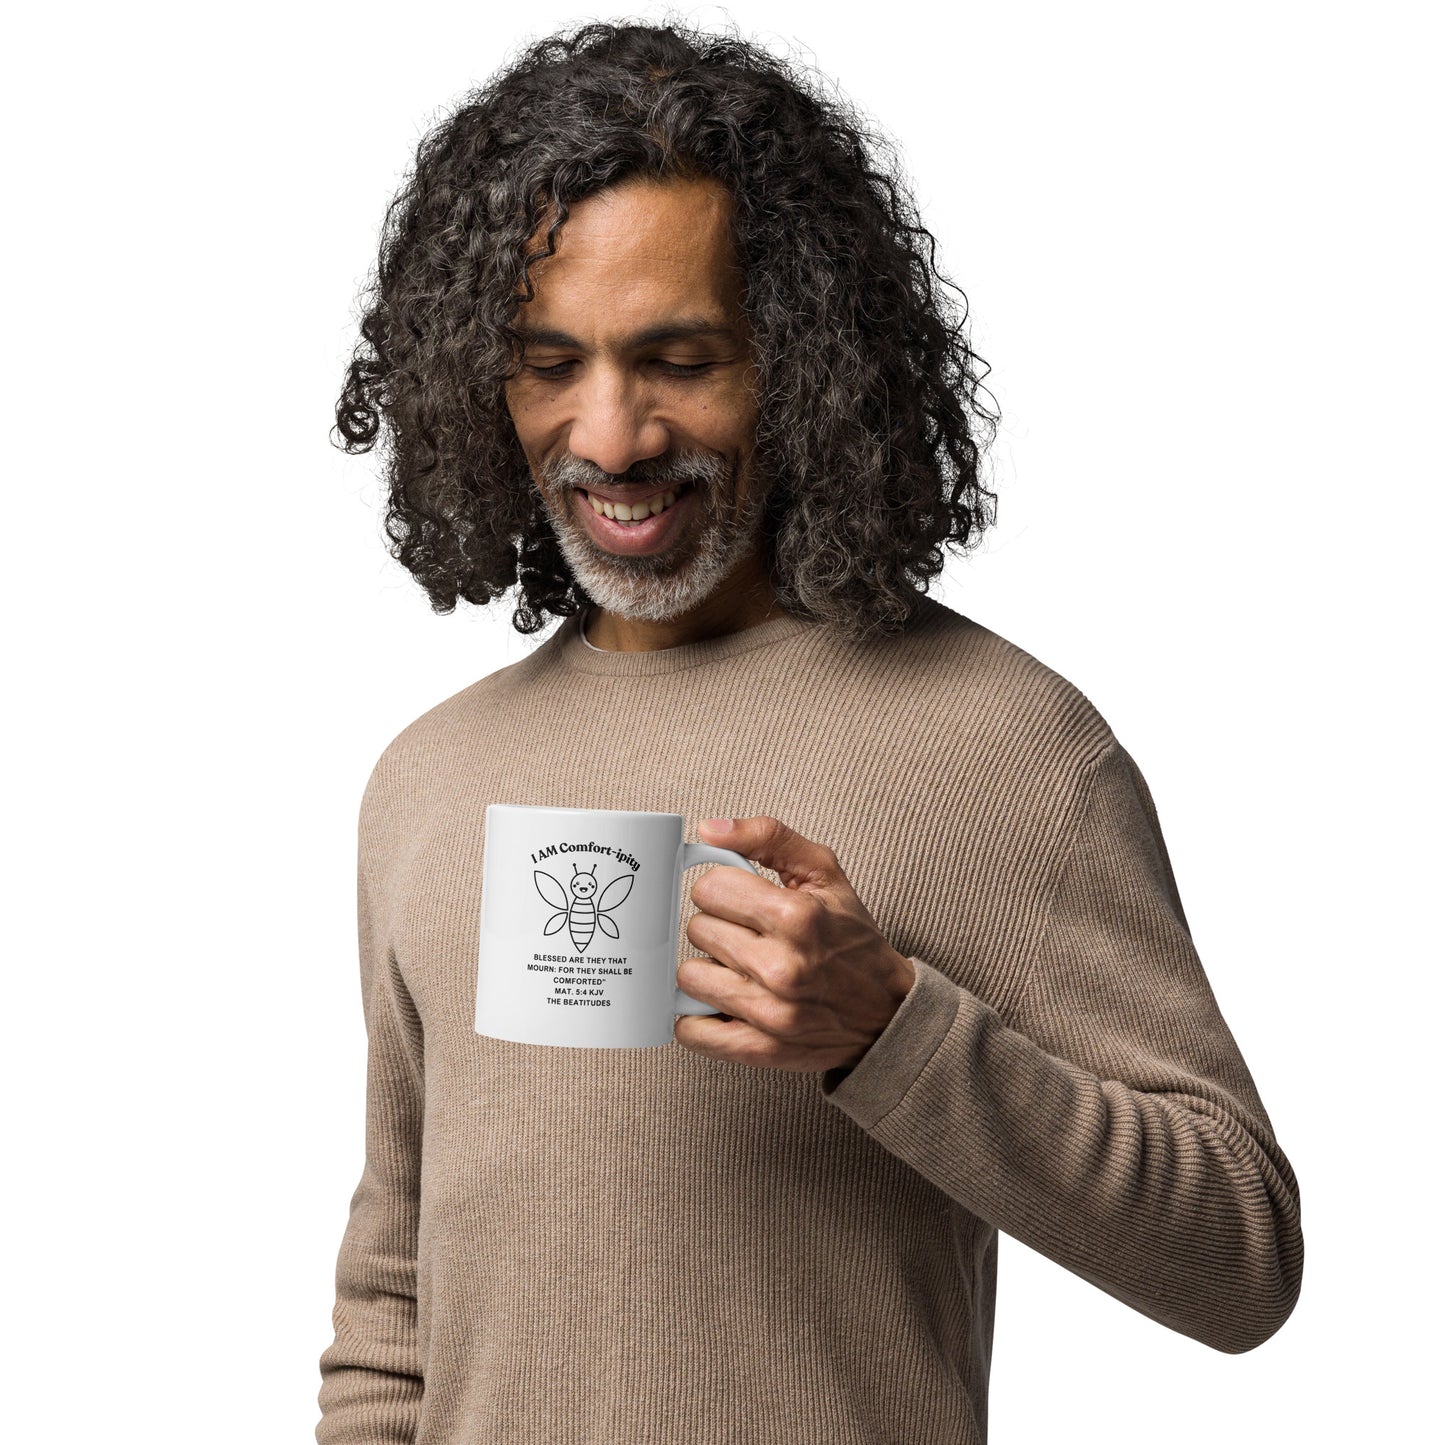 "I AM Comfort-ipity" Coffee Mug B/W